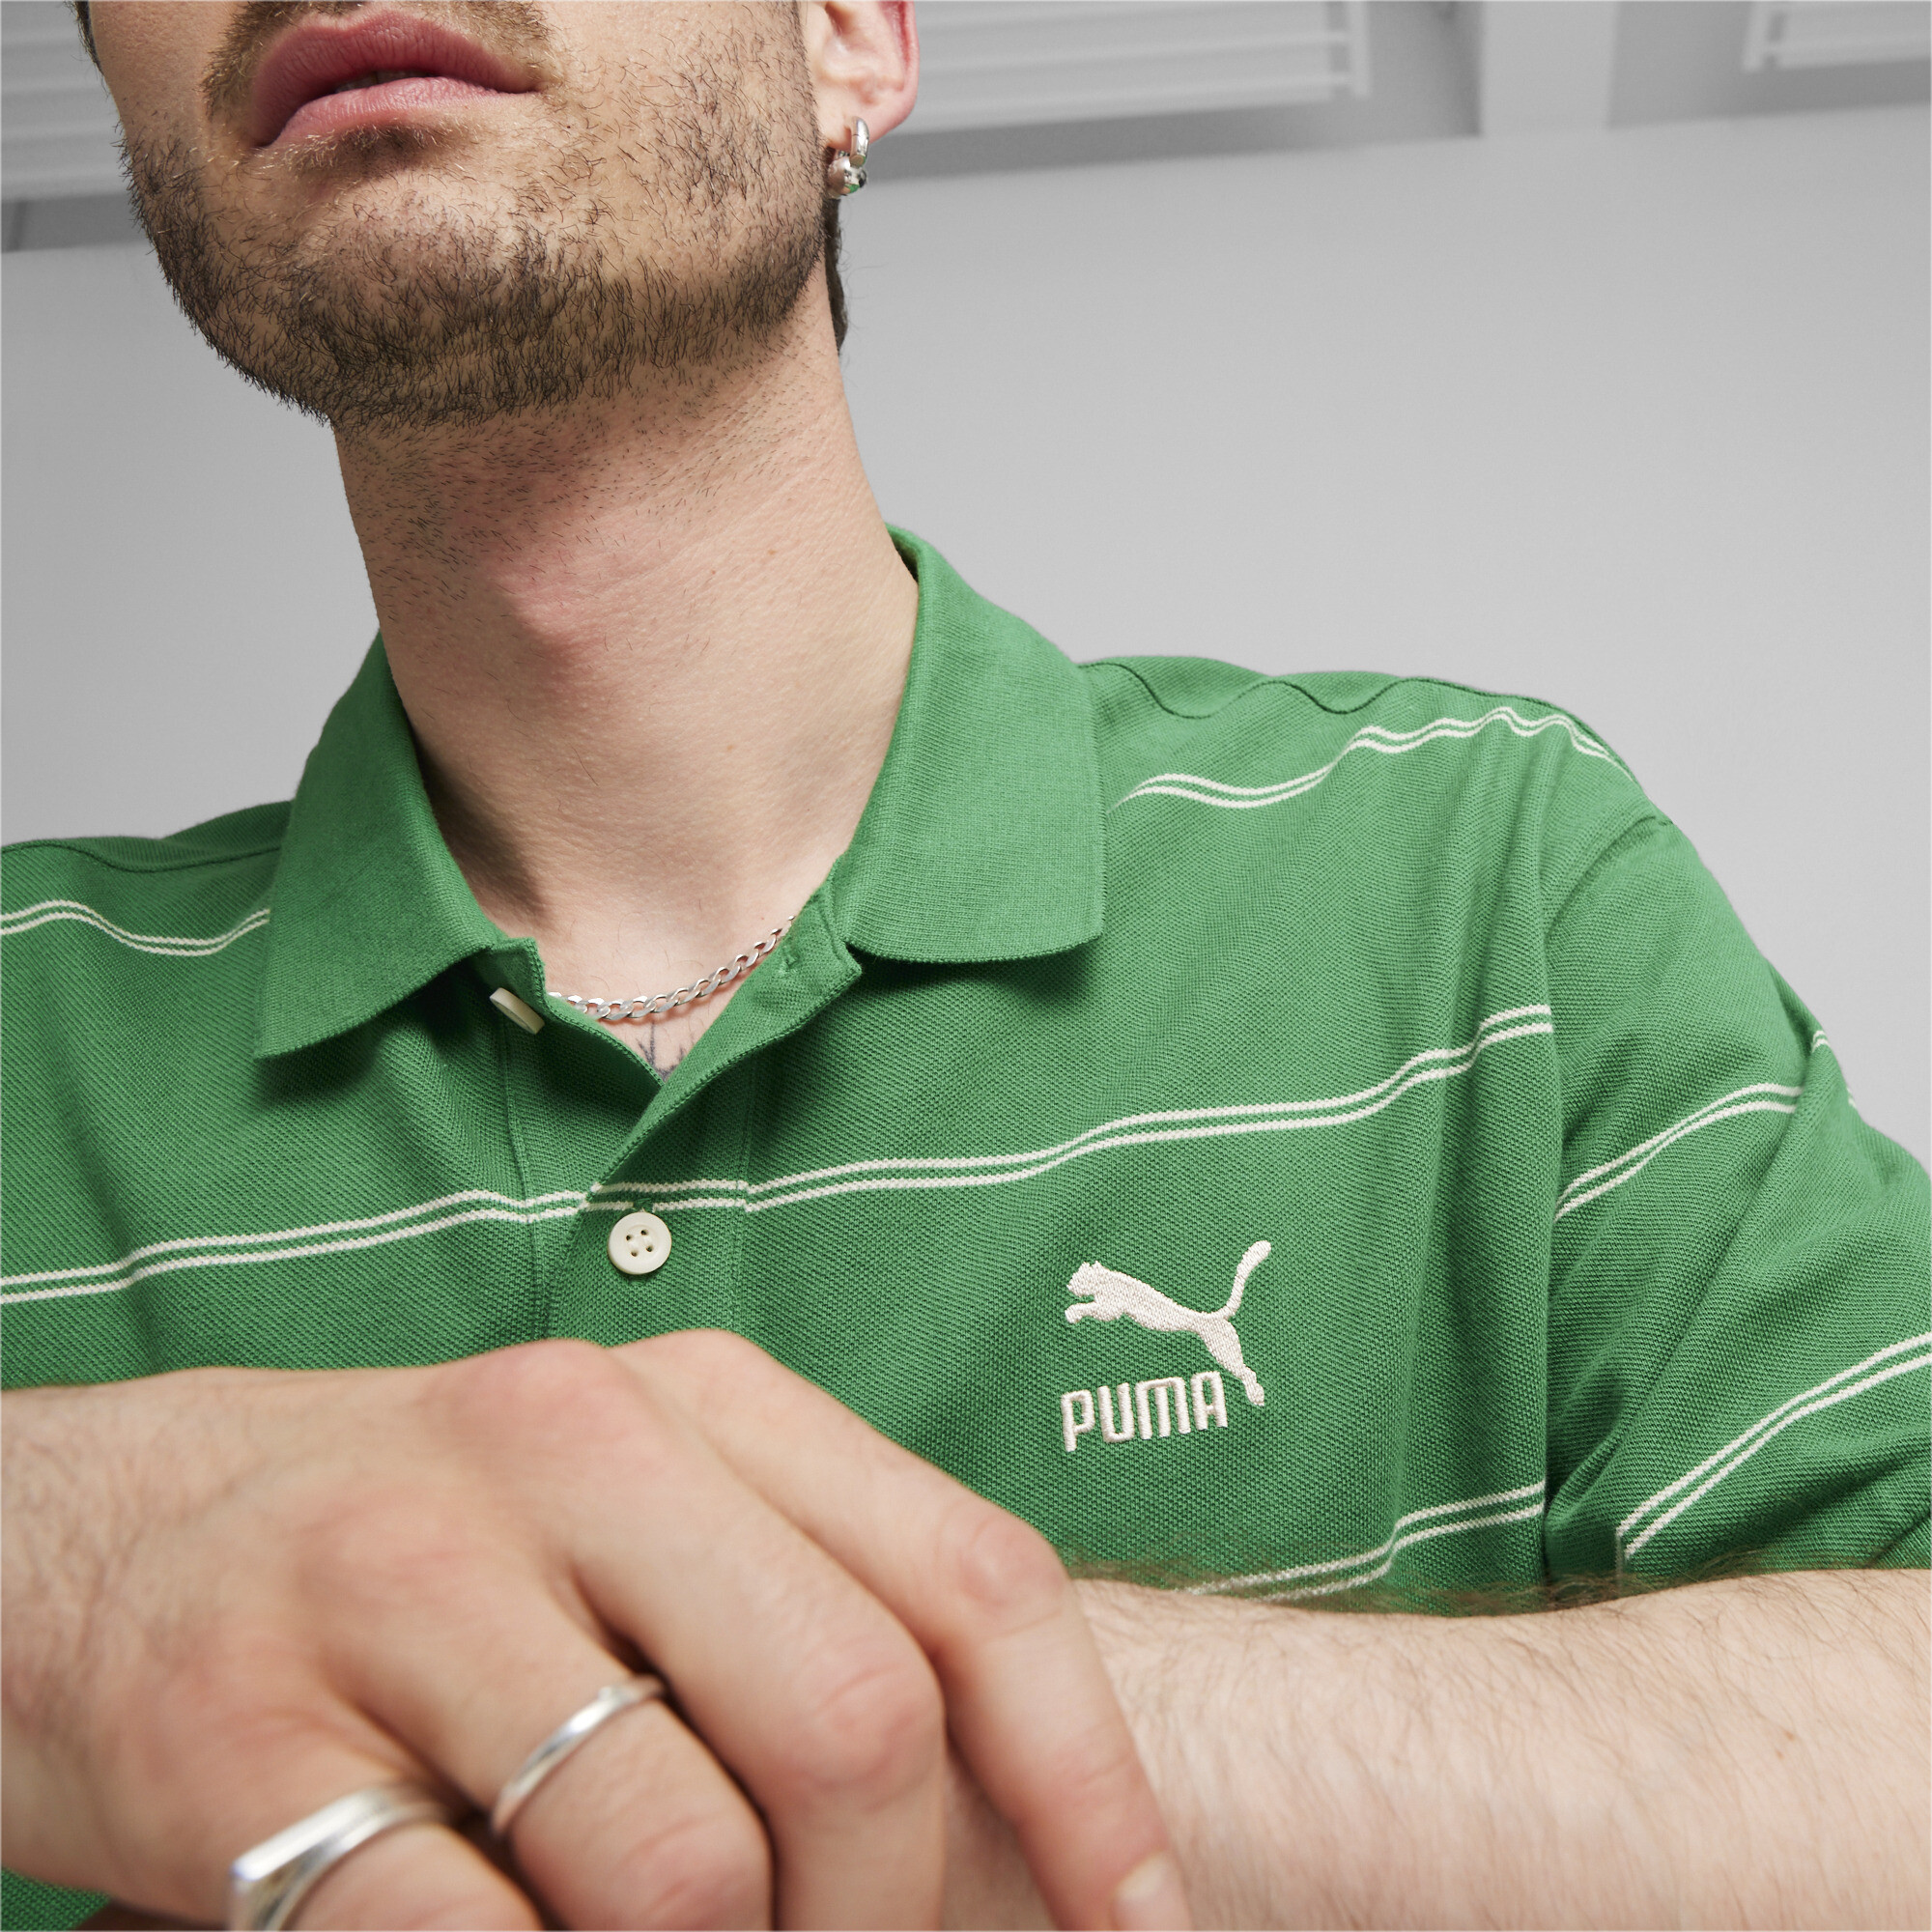 Men's PUMA TEAM Polo In Green, Size XL